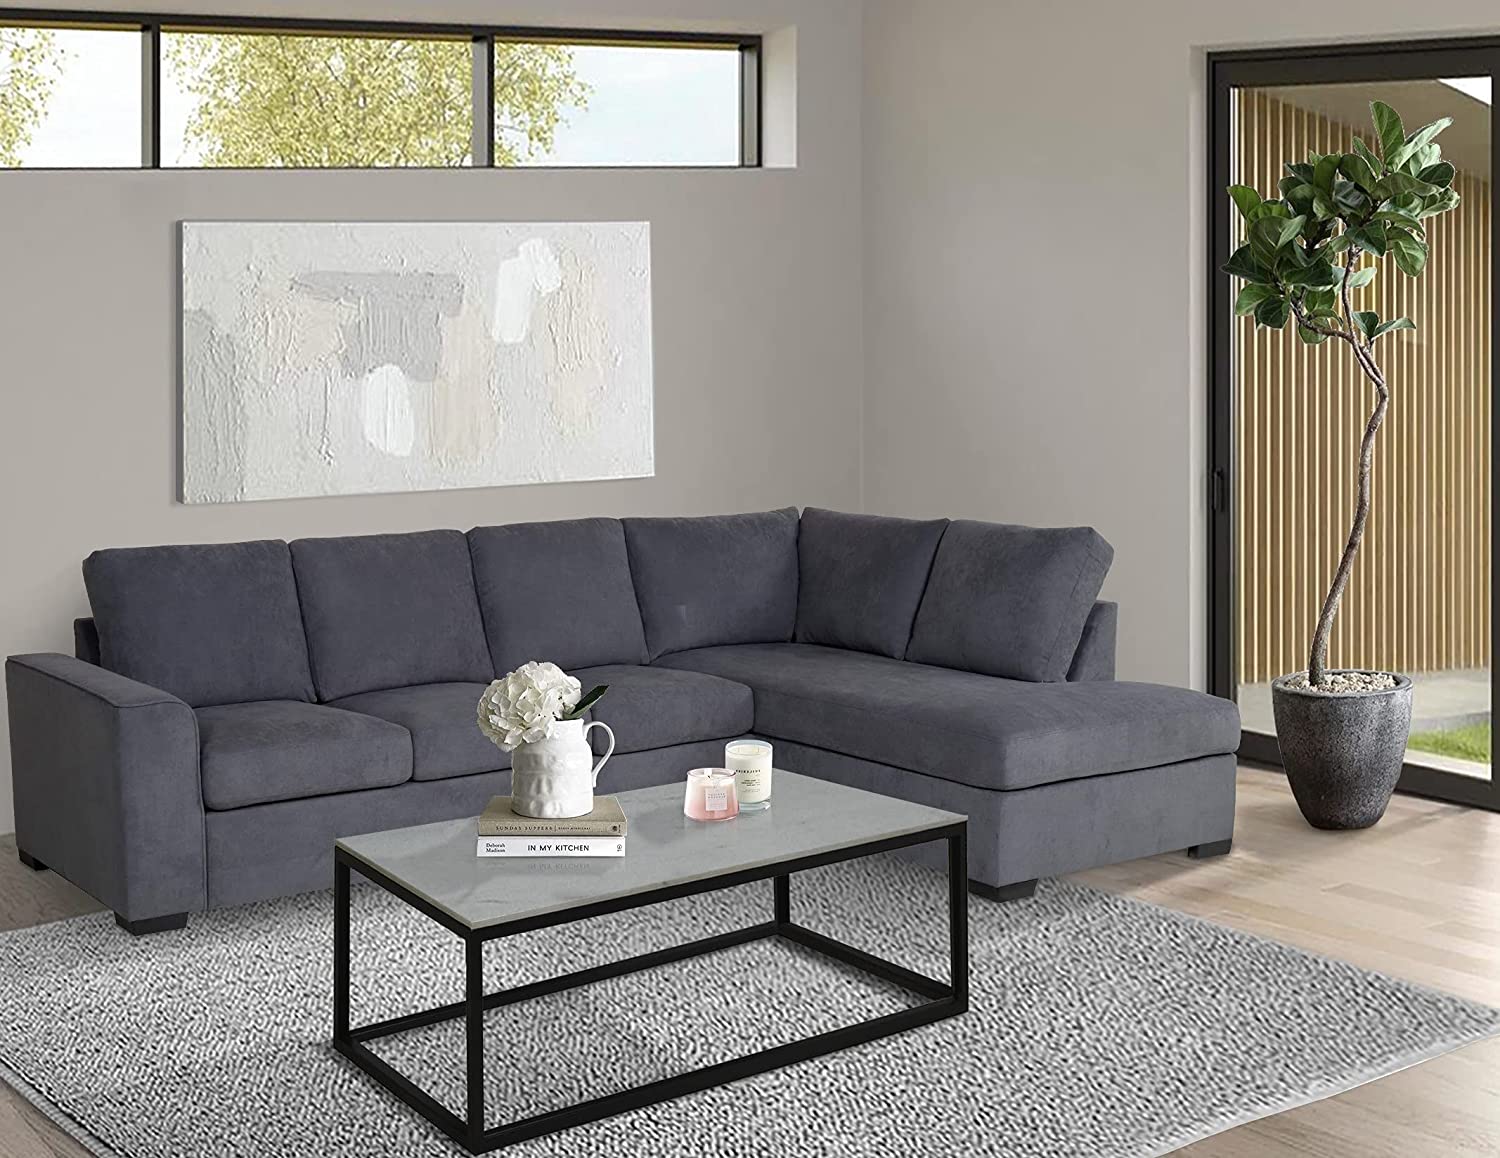 best sofa set in india, online l shape sofa set price lowest in delhi, bangalore, pune